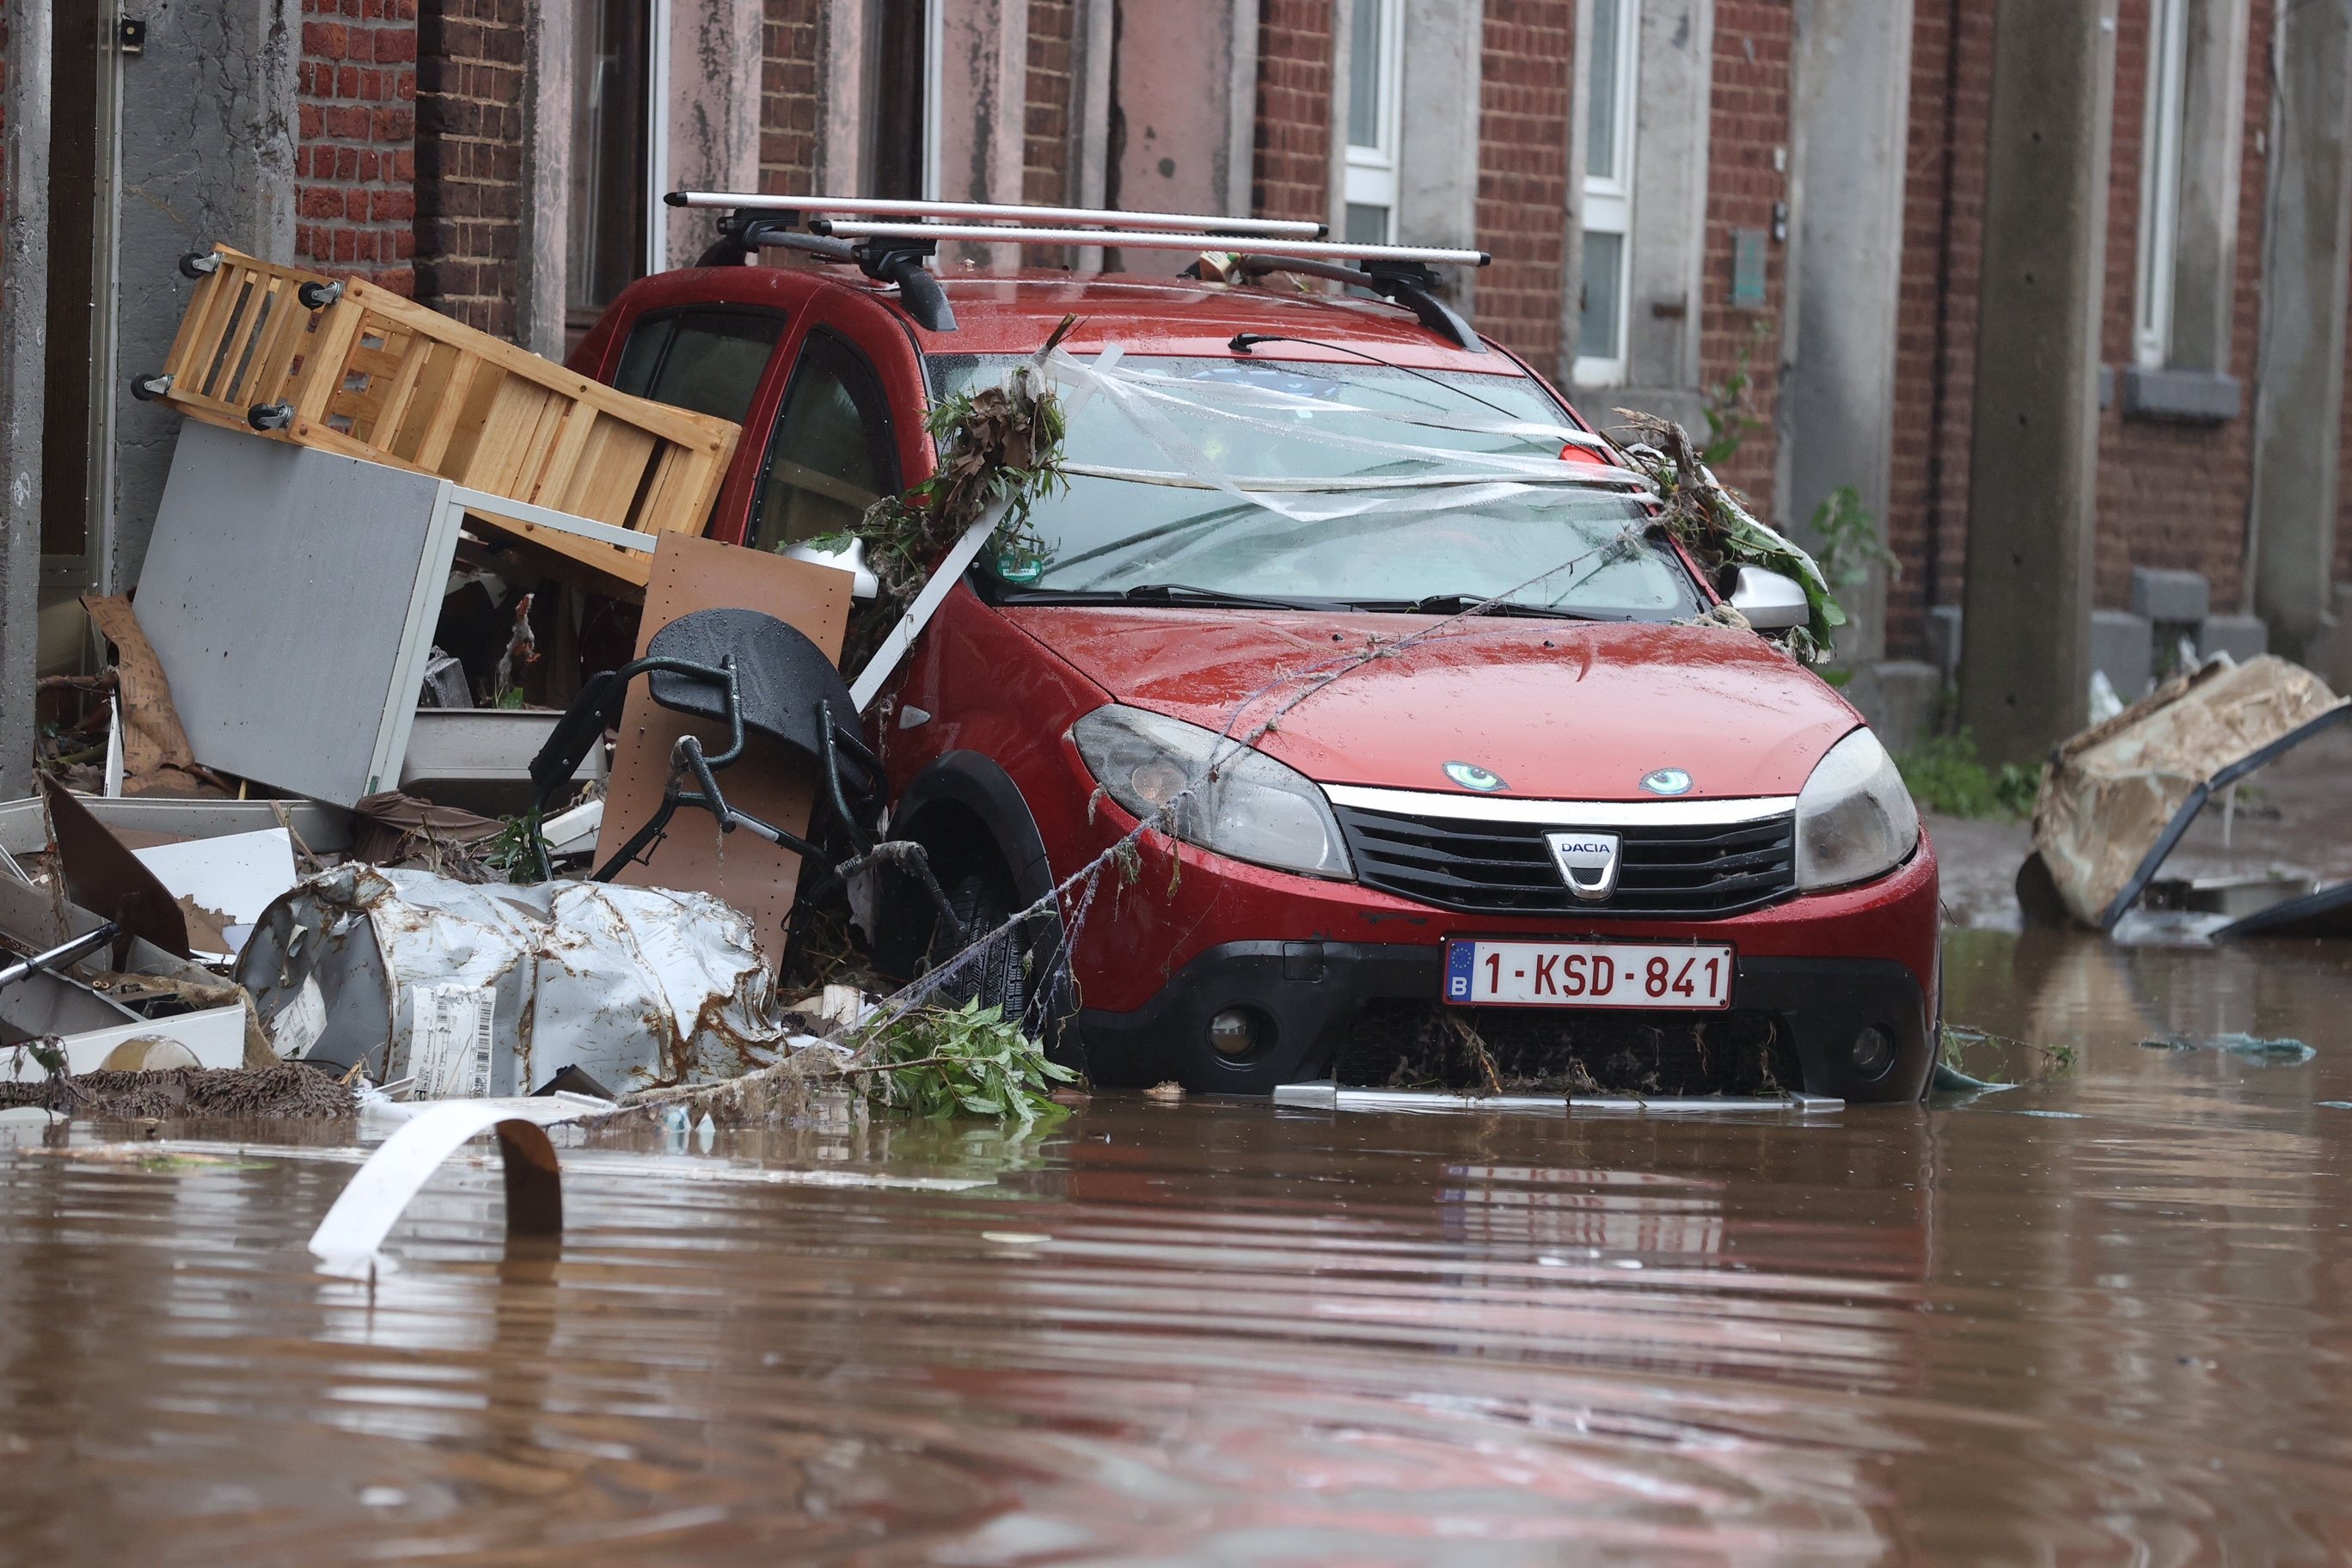 Flooded streets in Belgium as heavy rain in the region